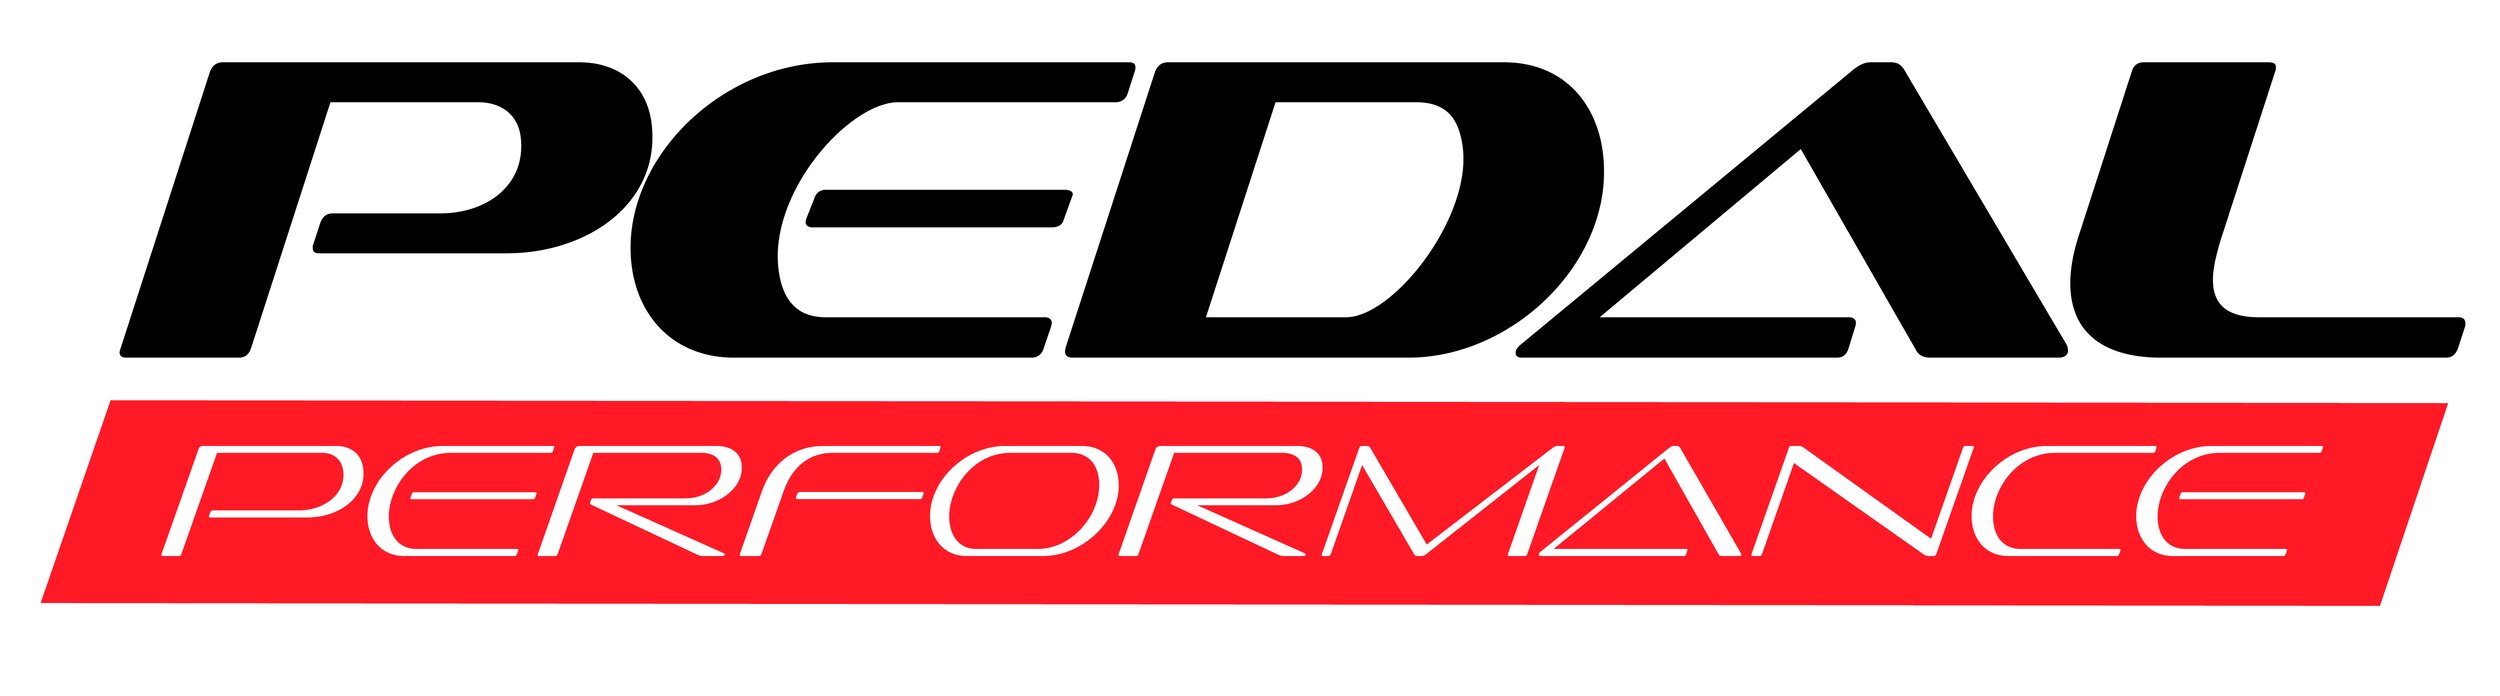 Pedal_Performance_Final_Logo.jpg